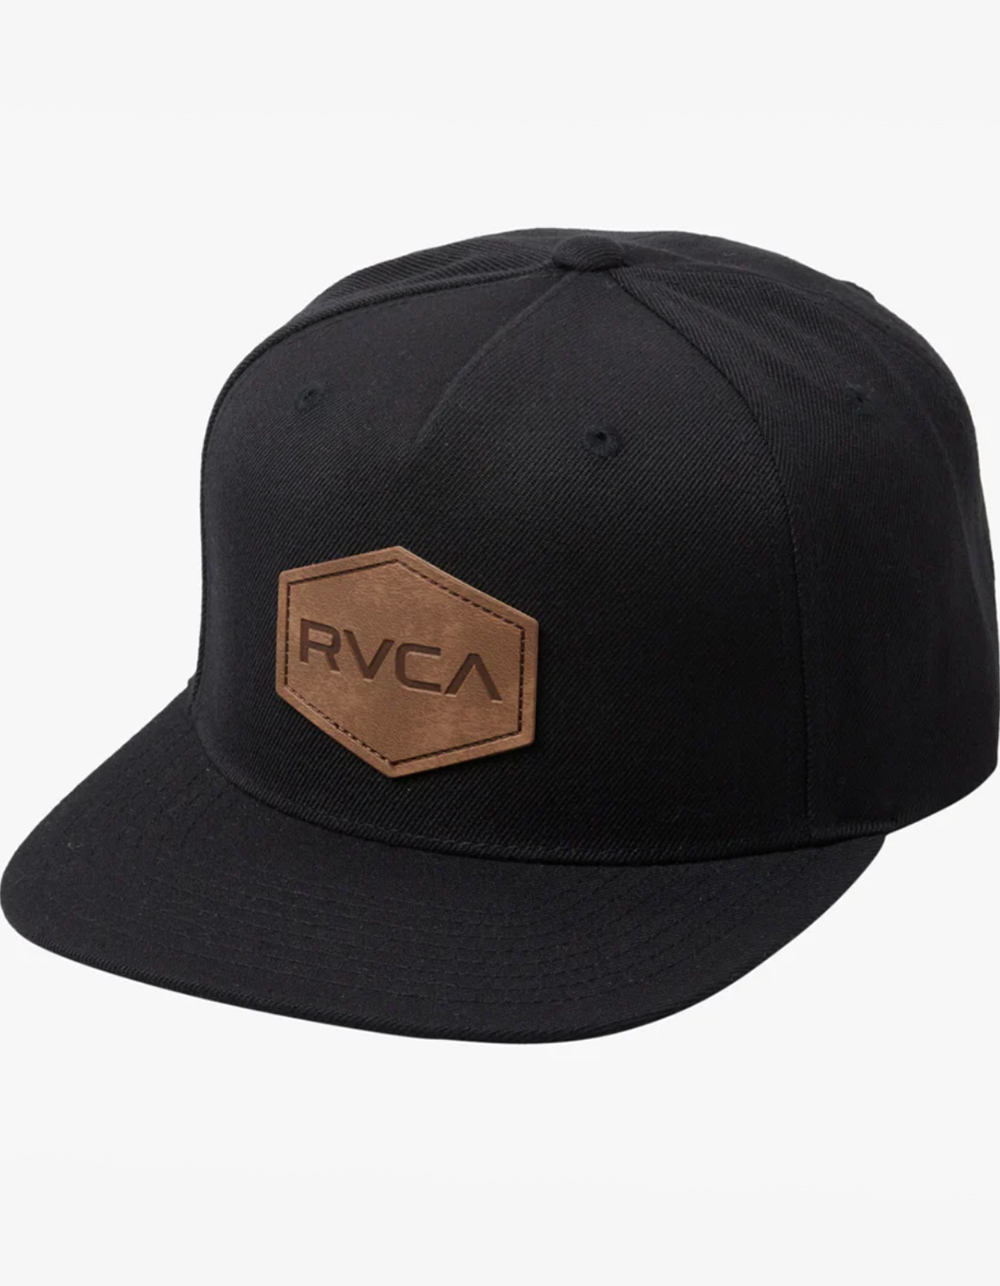 RVCA Commonwealth DLX Snapback Hat